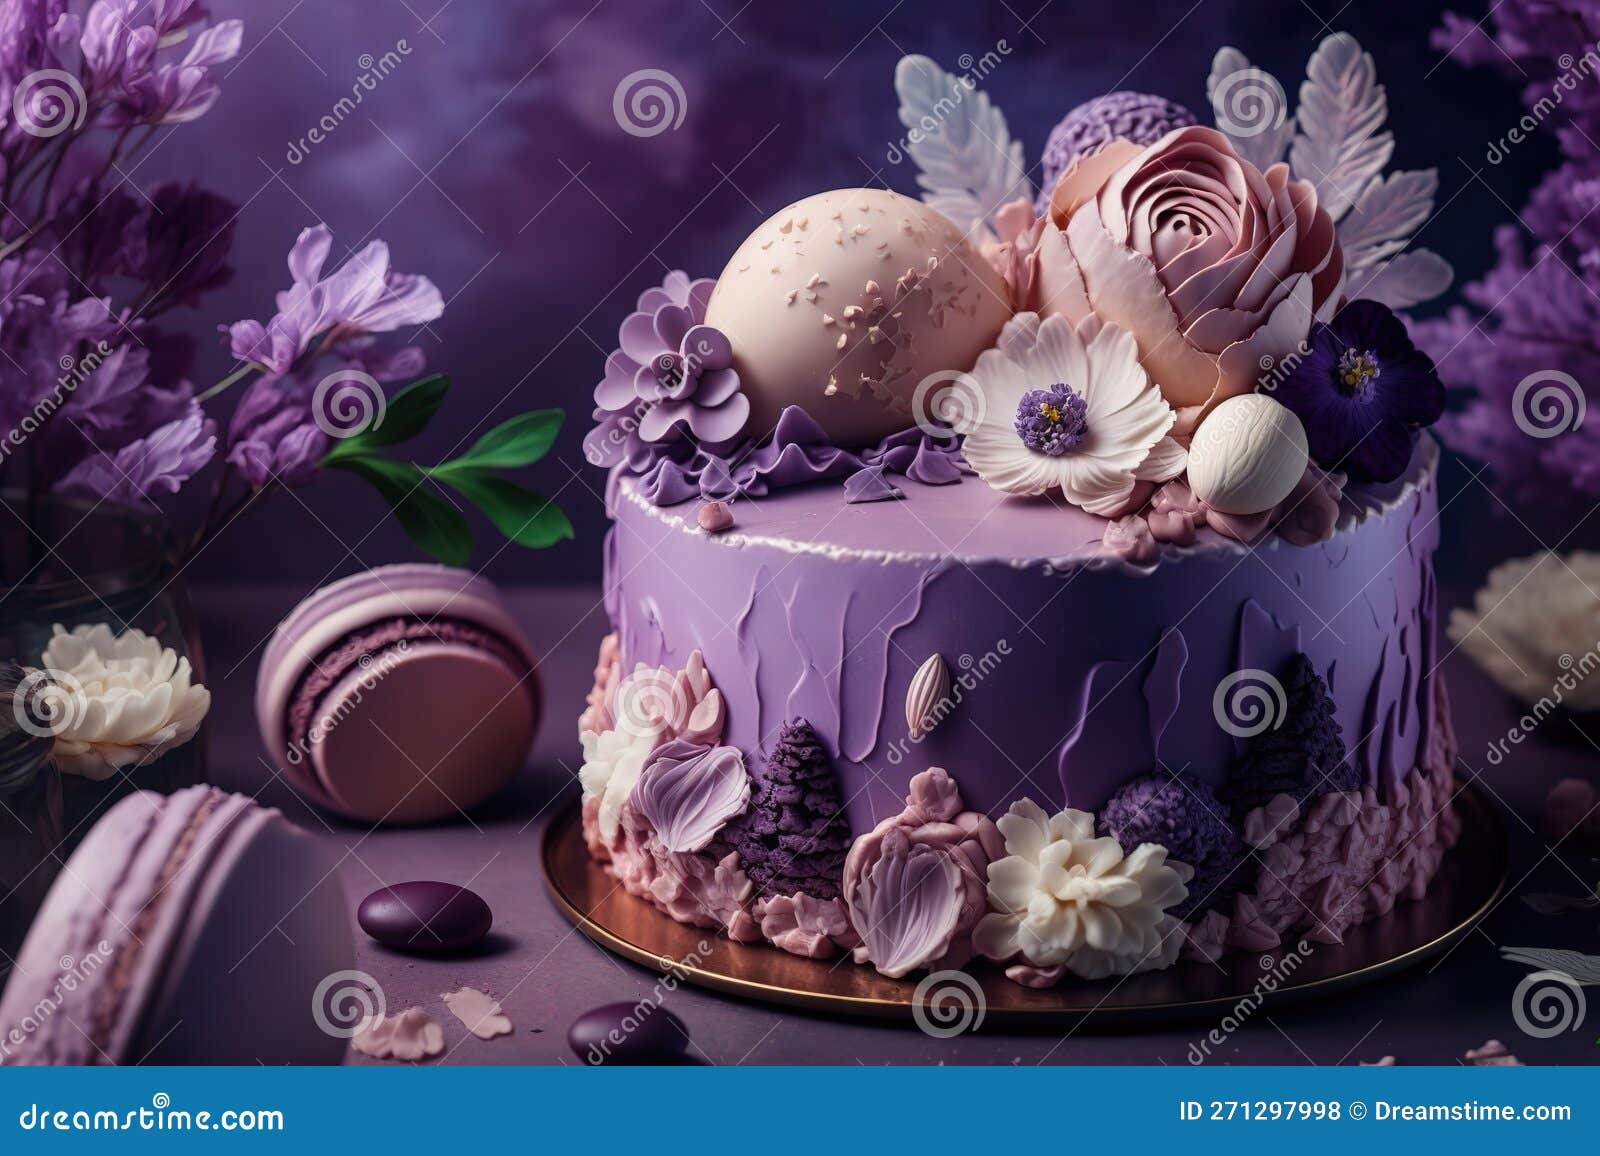 Caked Up - Purple fondant flower cake! | Facebook